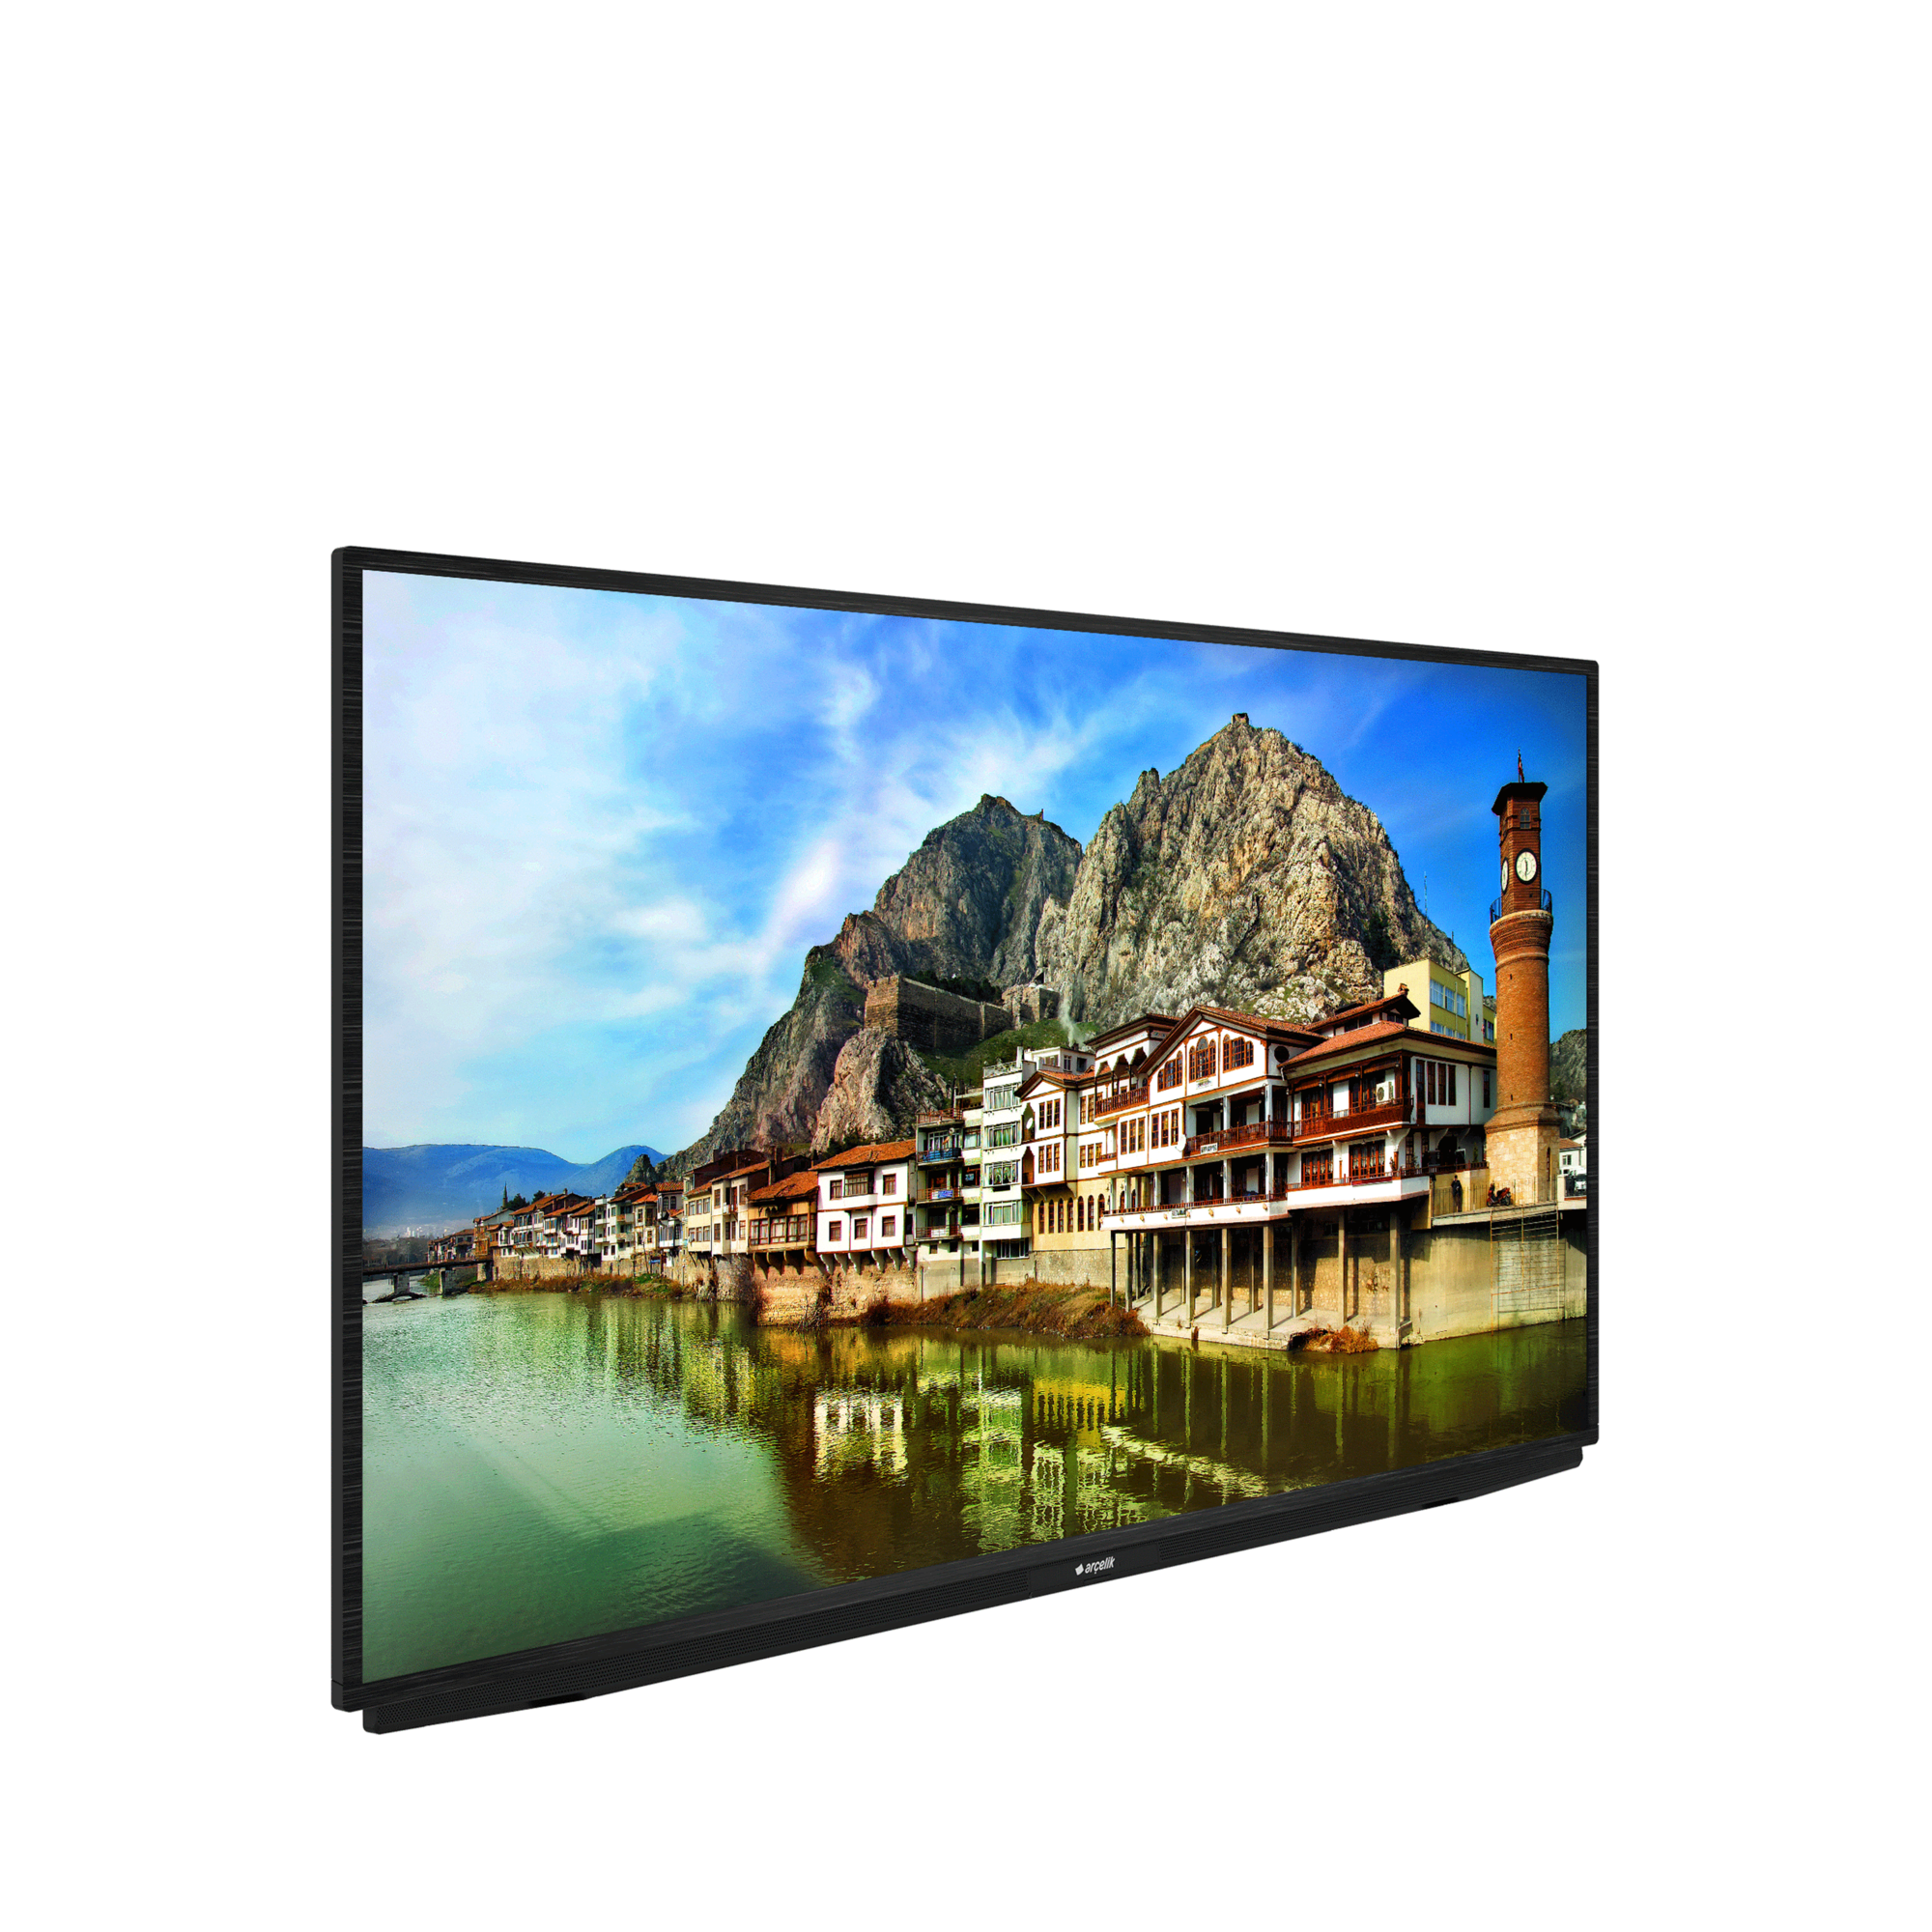 A50K 790G HOTEL TV LED & LCD TV